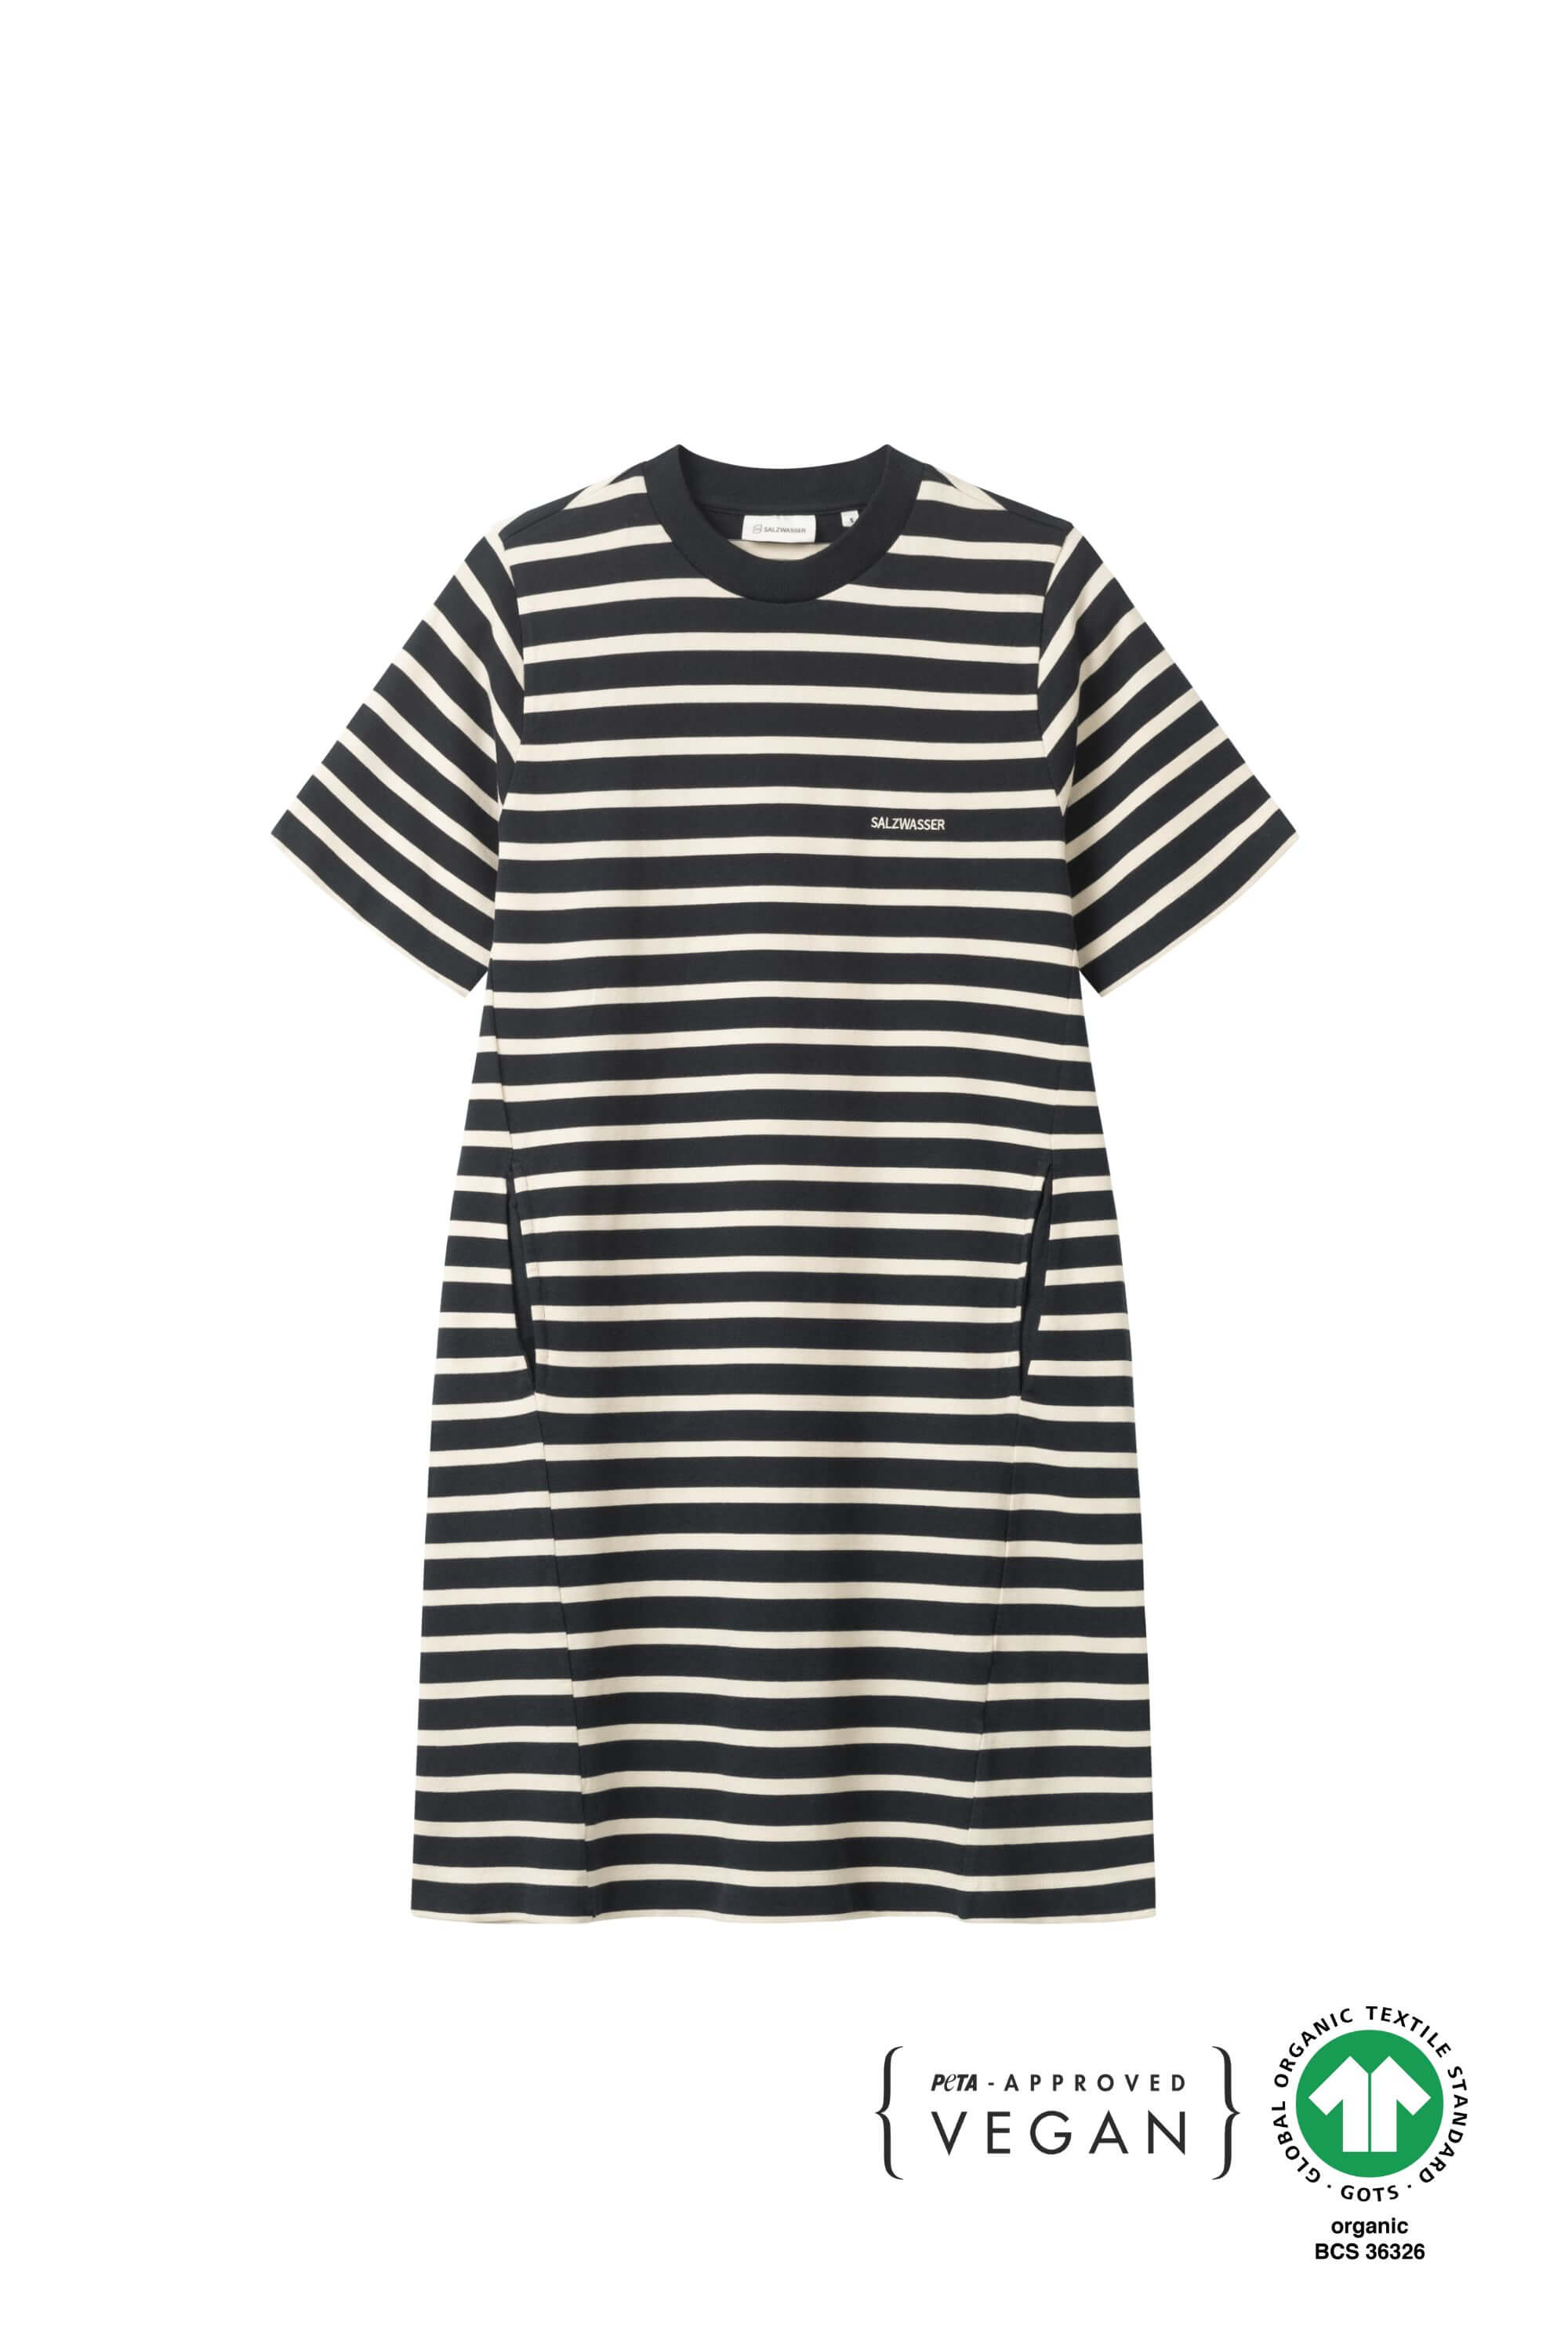 T-shirt dress Sol Navy-Striped made of organic cotton from Salzwasser